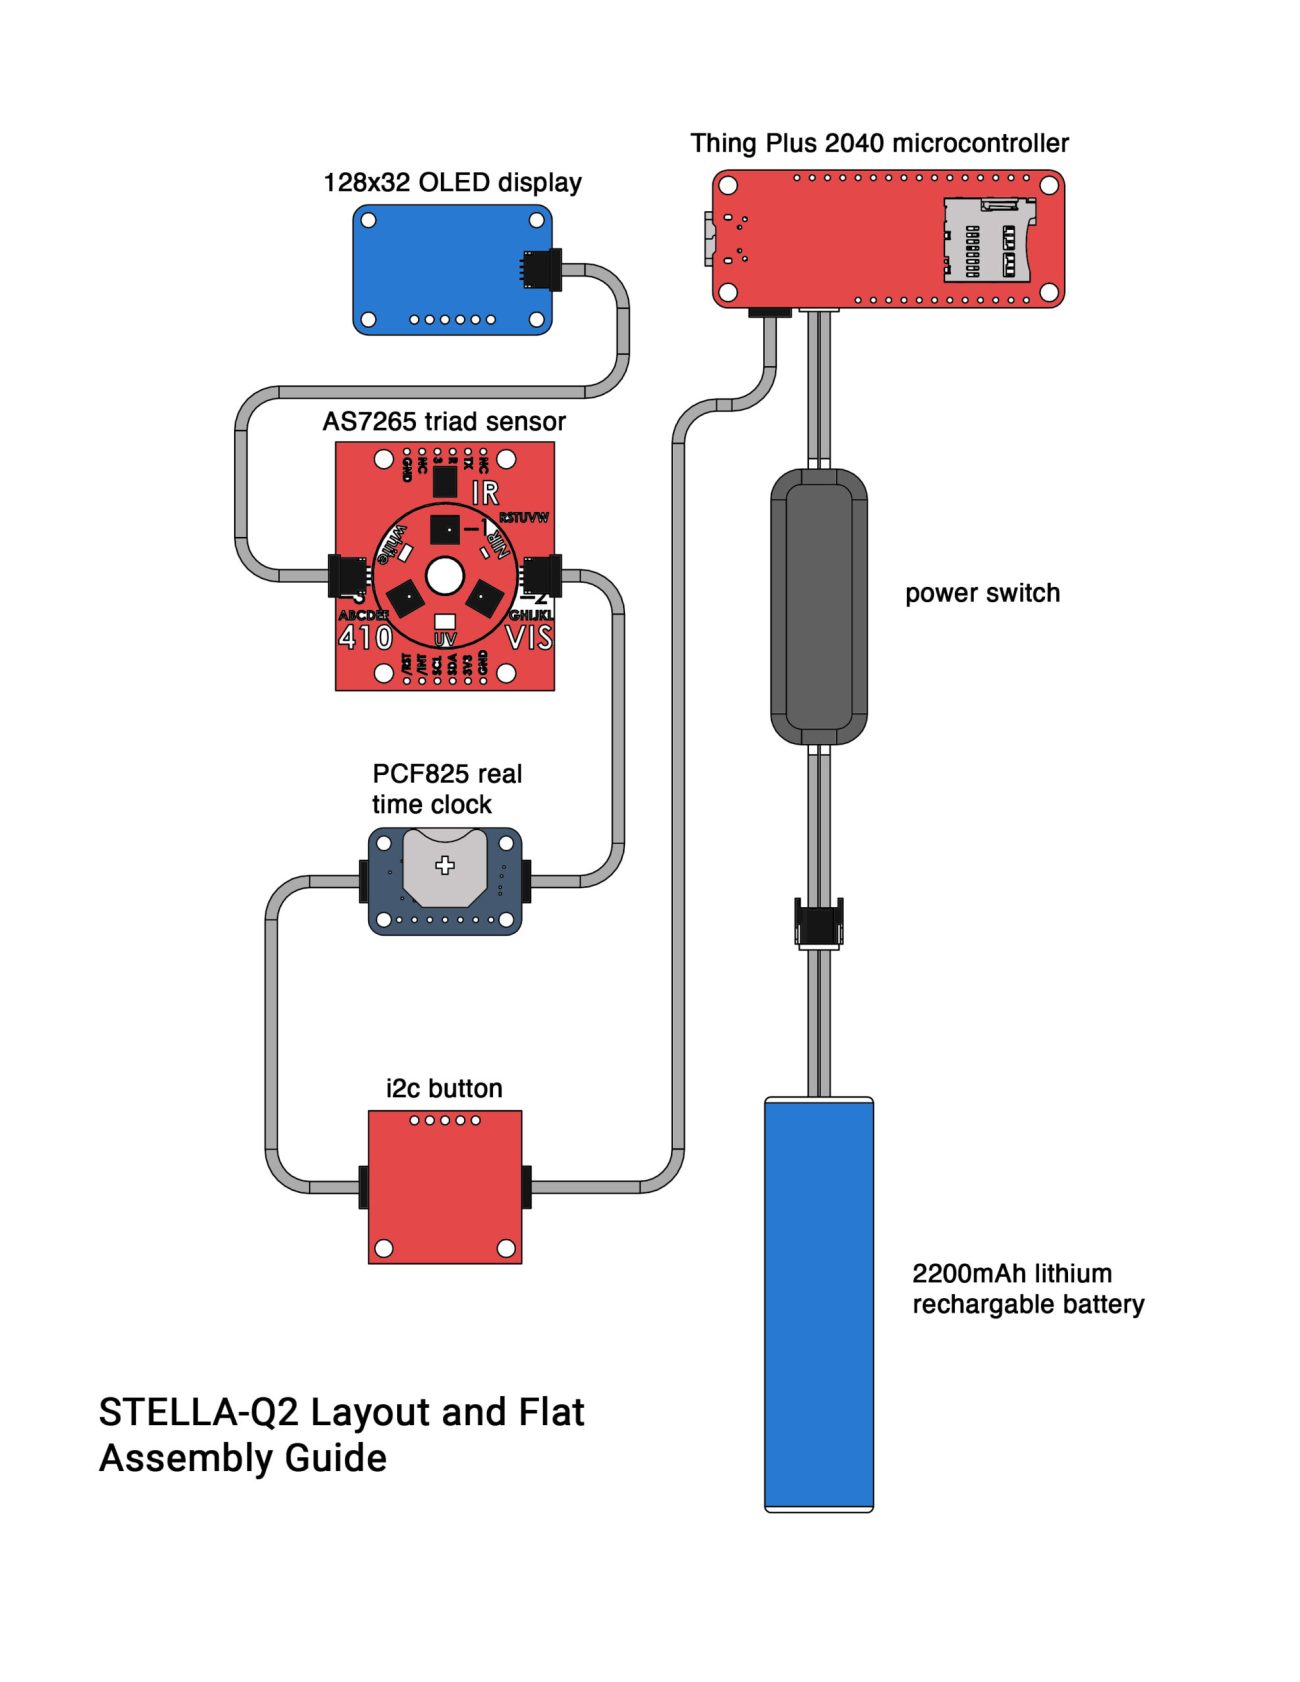 STELLA-Q2 flat assembly